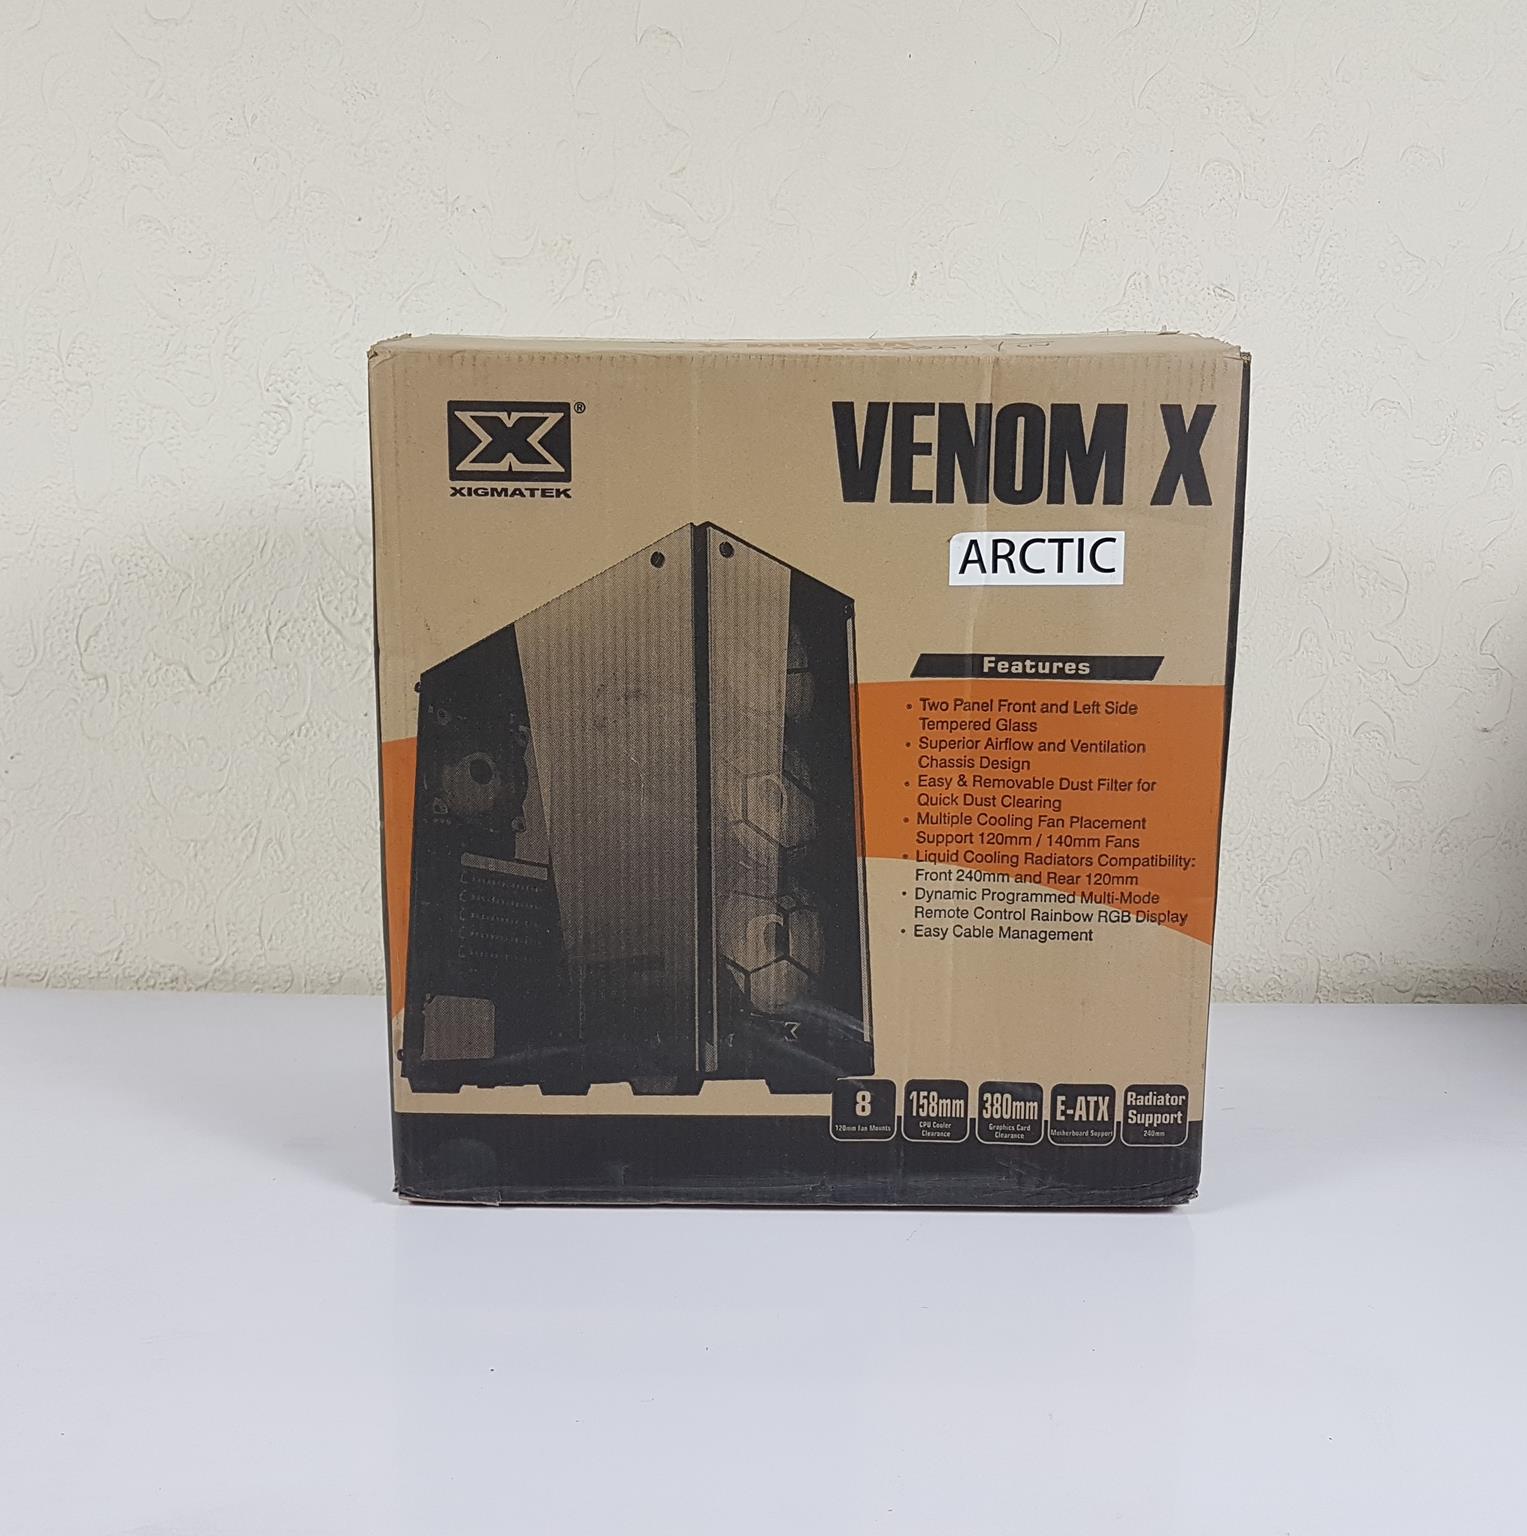 XIGMATEK VENOM Packaging and Unboxing